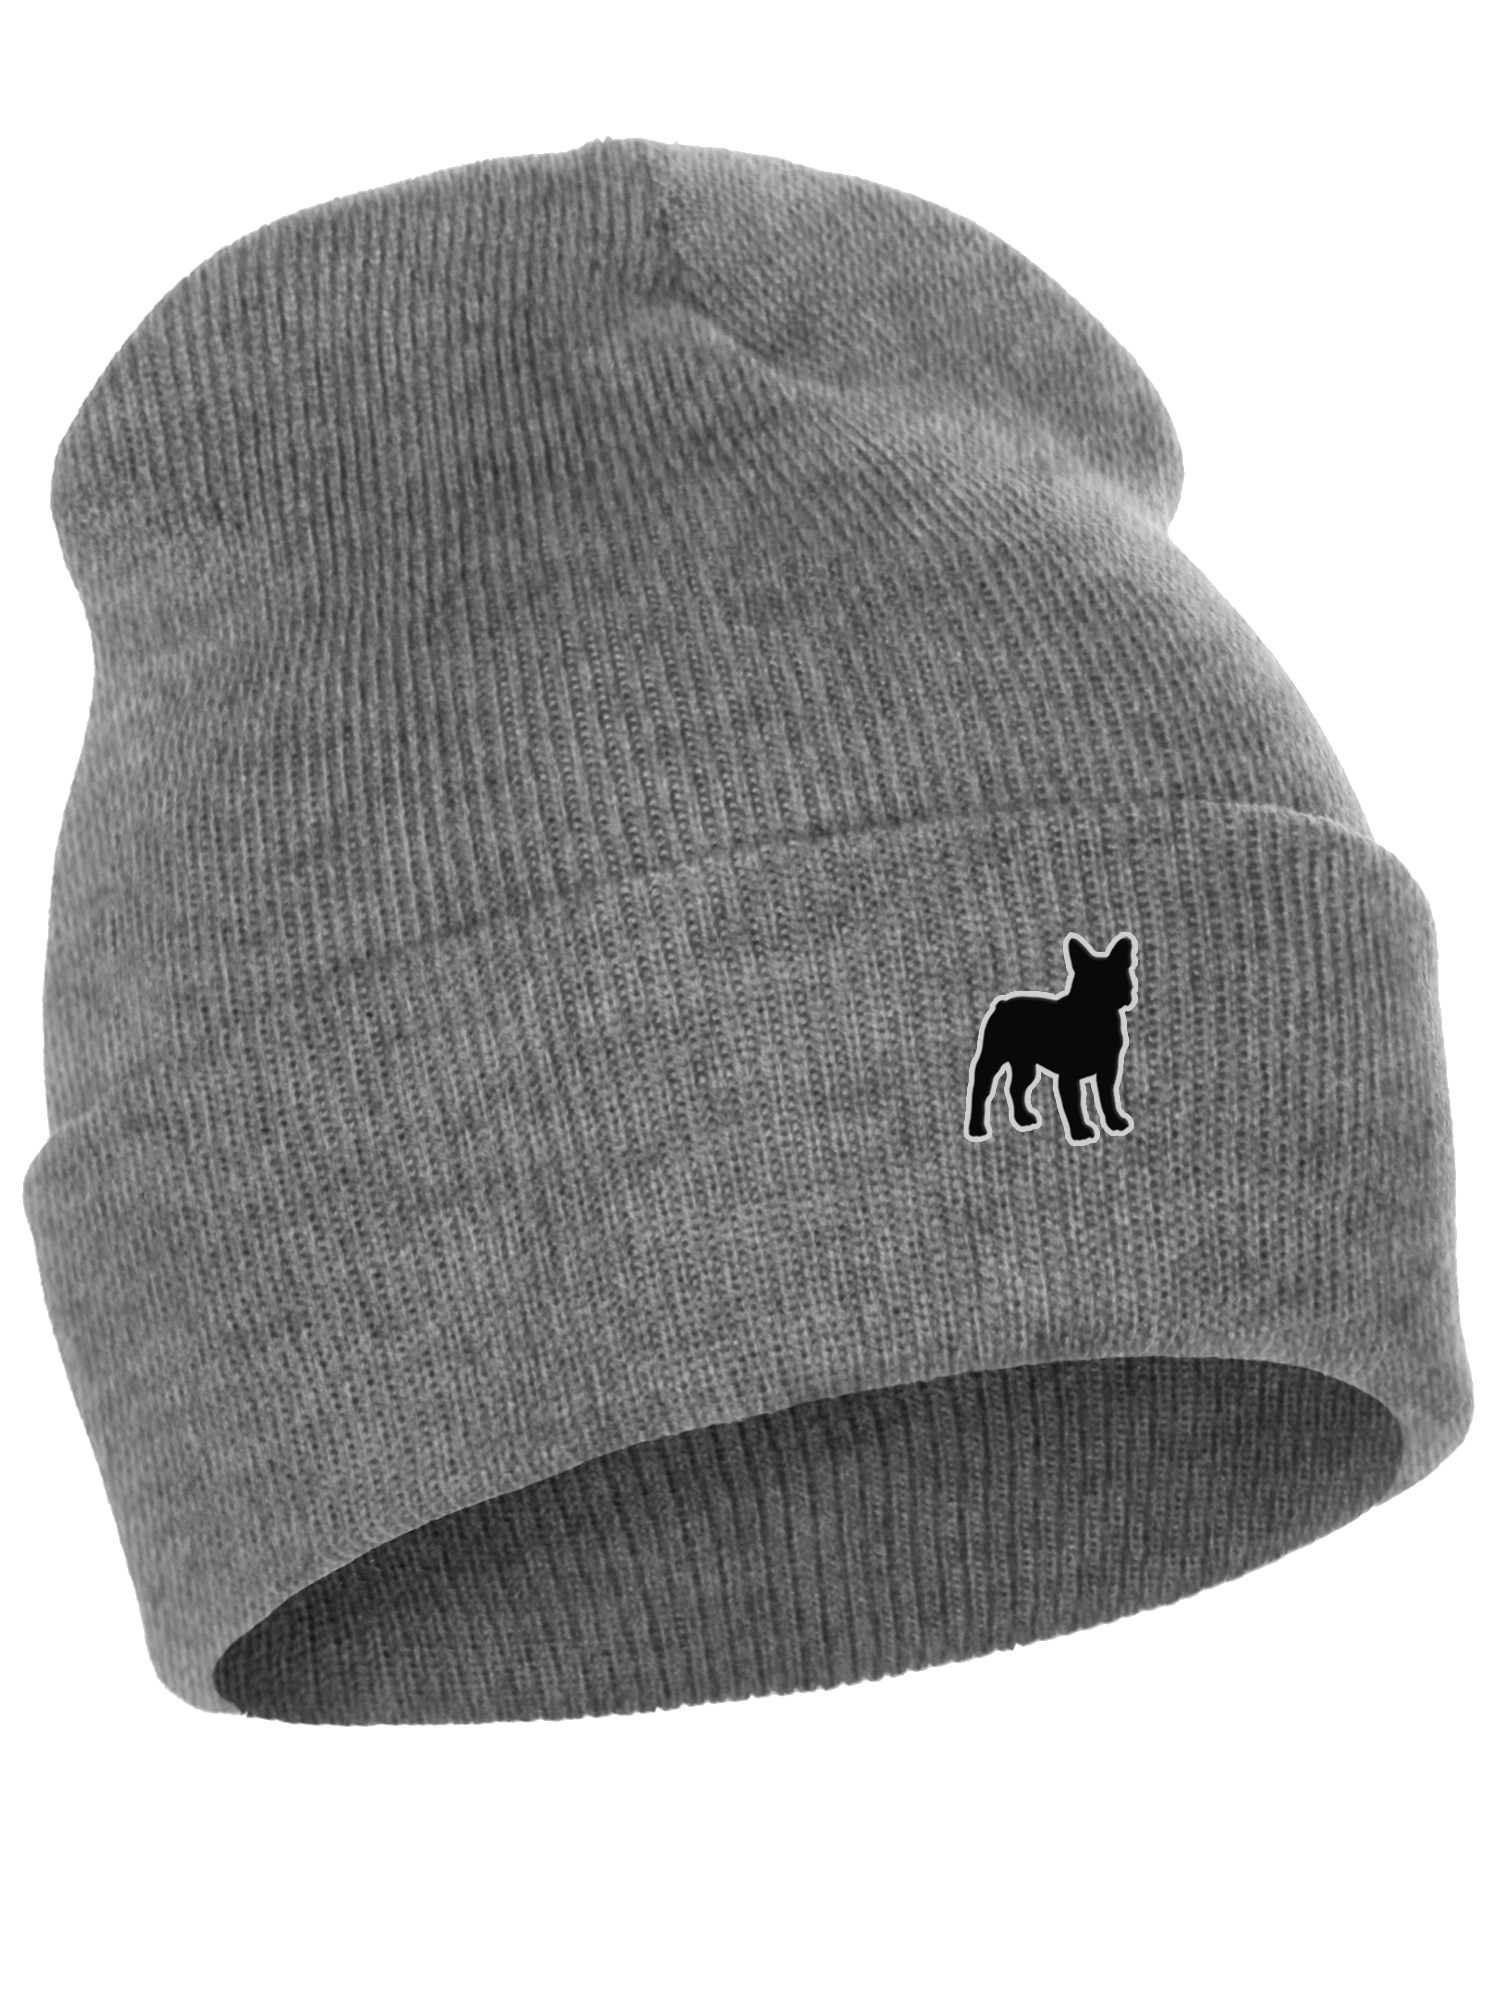 Daxton Dog Breeds Cuffed Beanie Winter Knit Hat Skully Cap, French Bulldog, Heather Gray Beanie - image 1 of 2